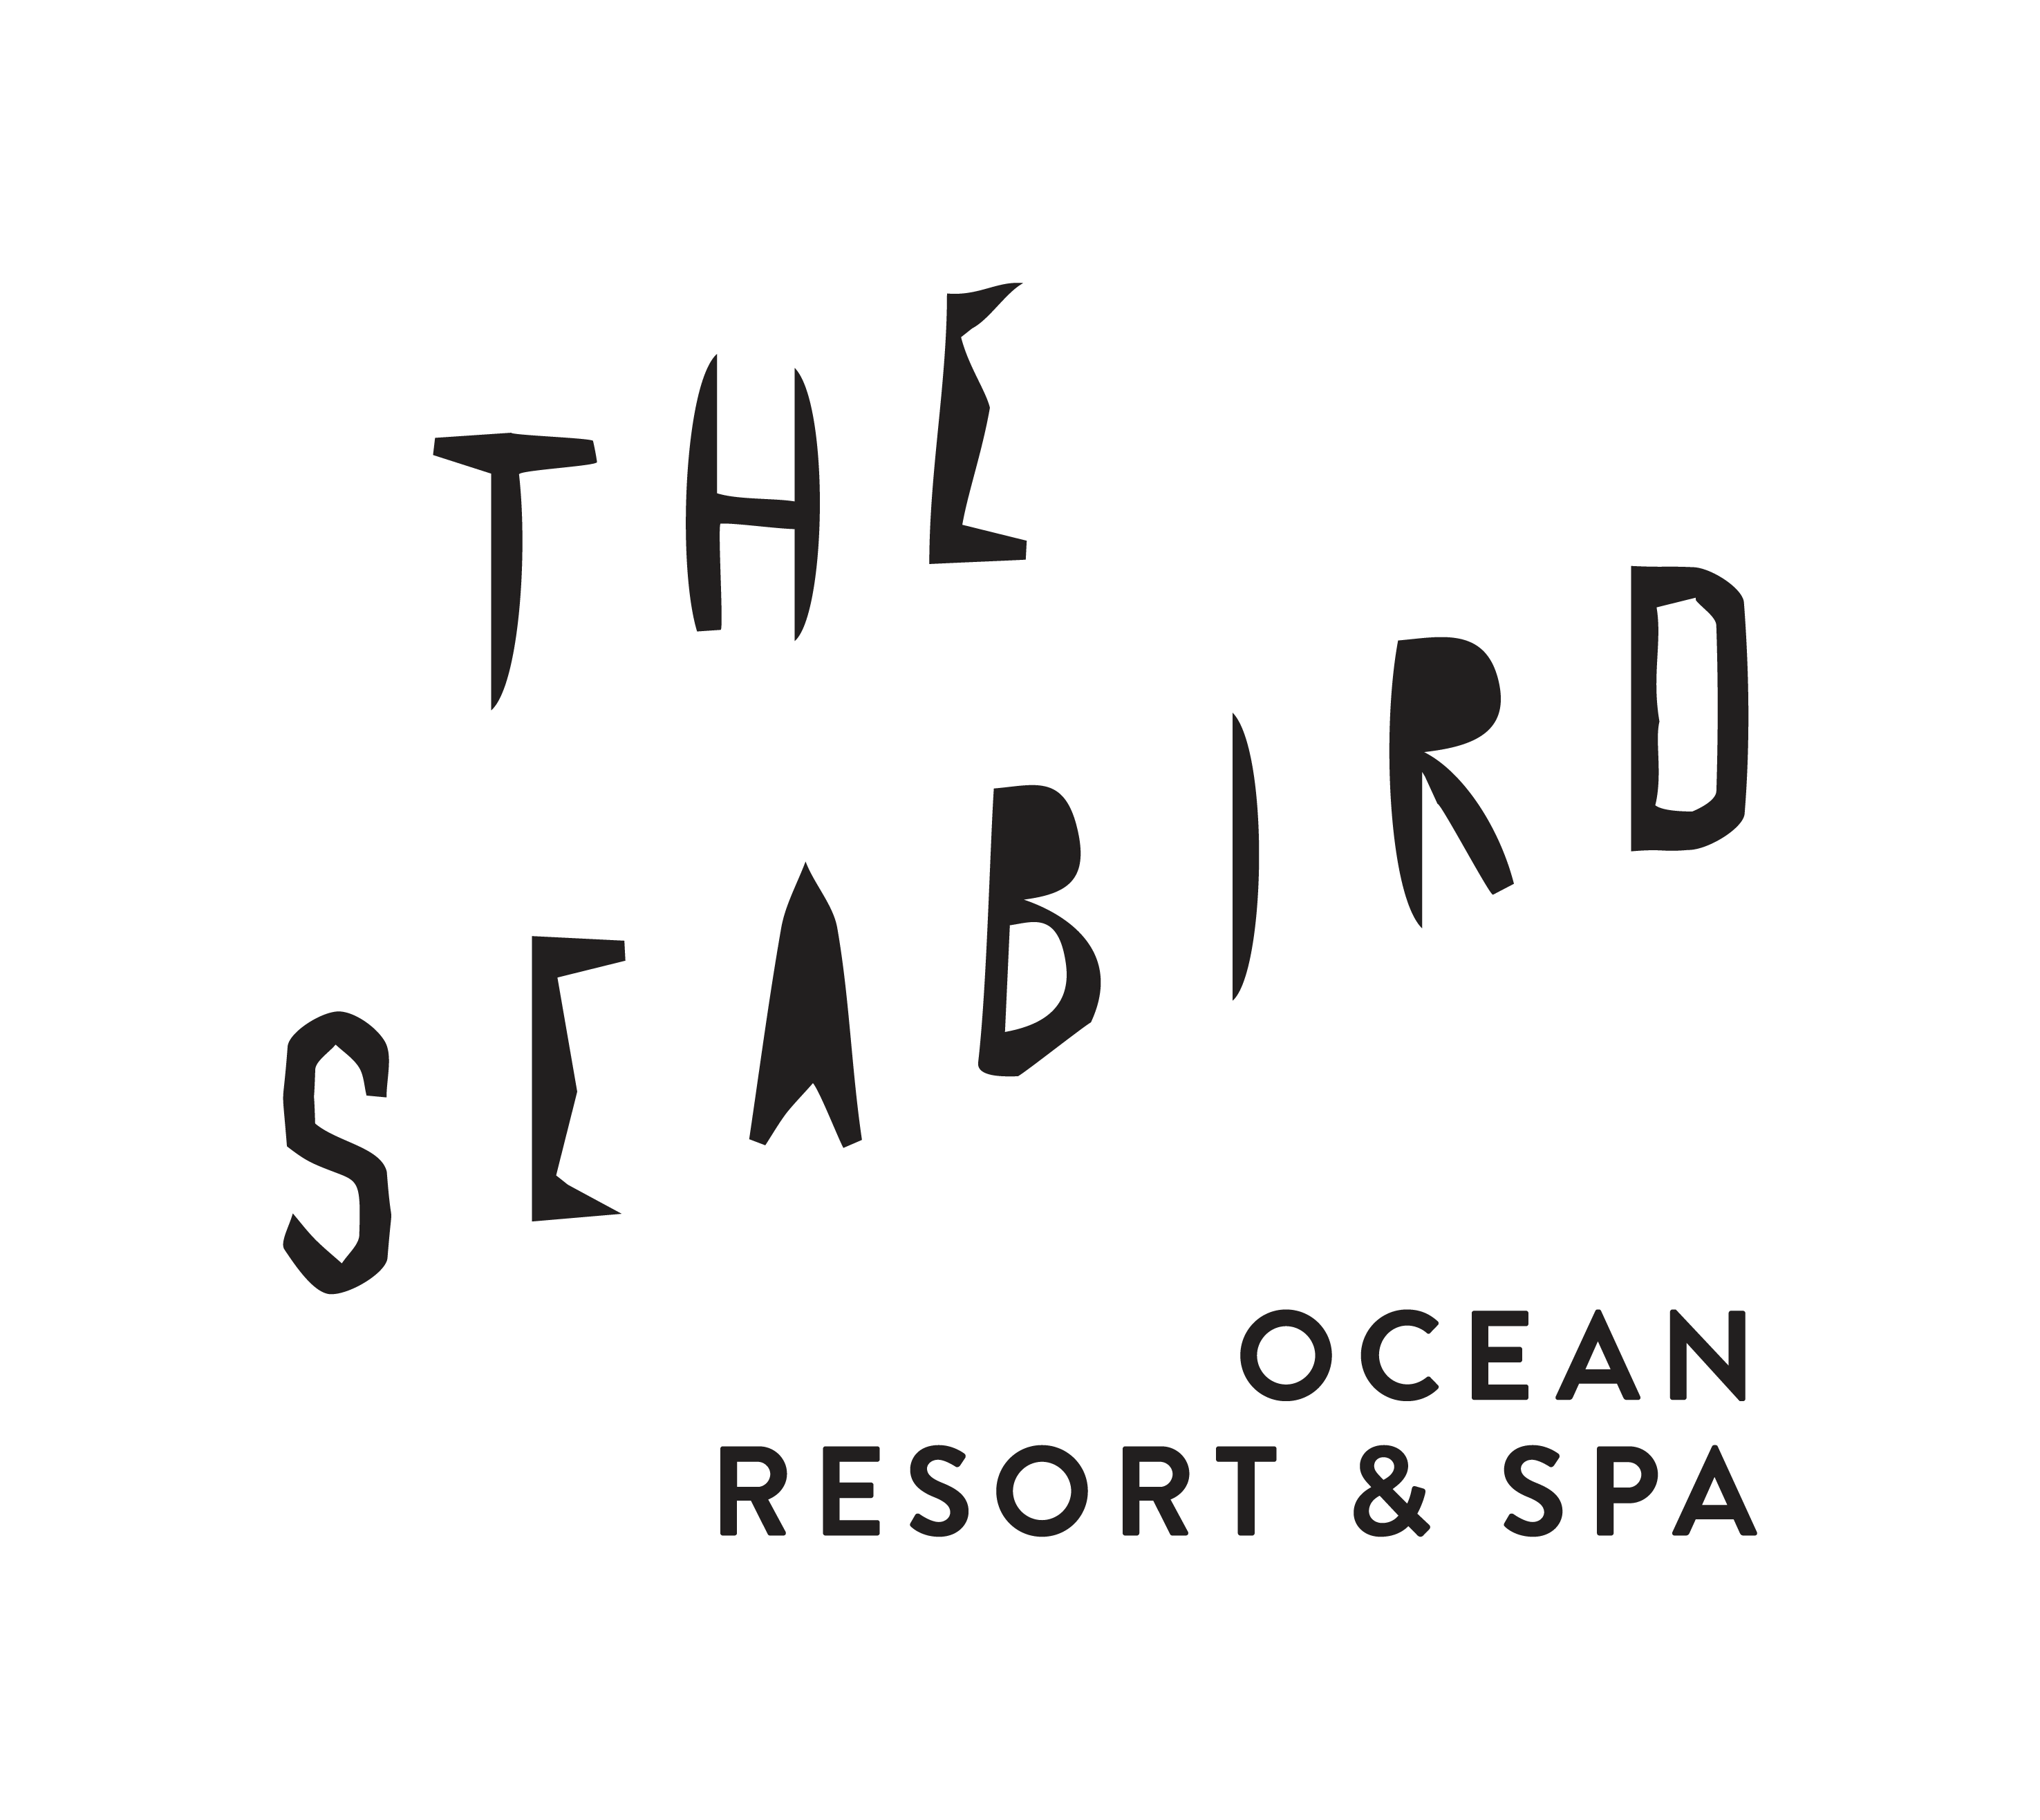 The Seabird Resort